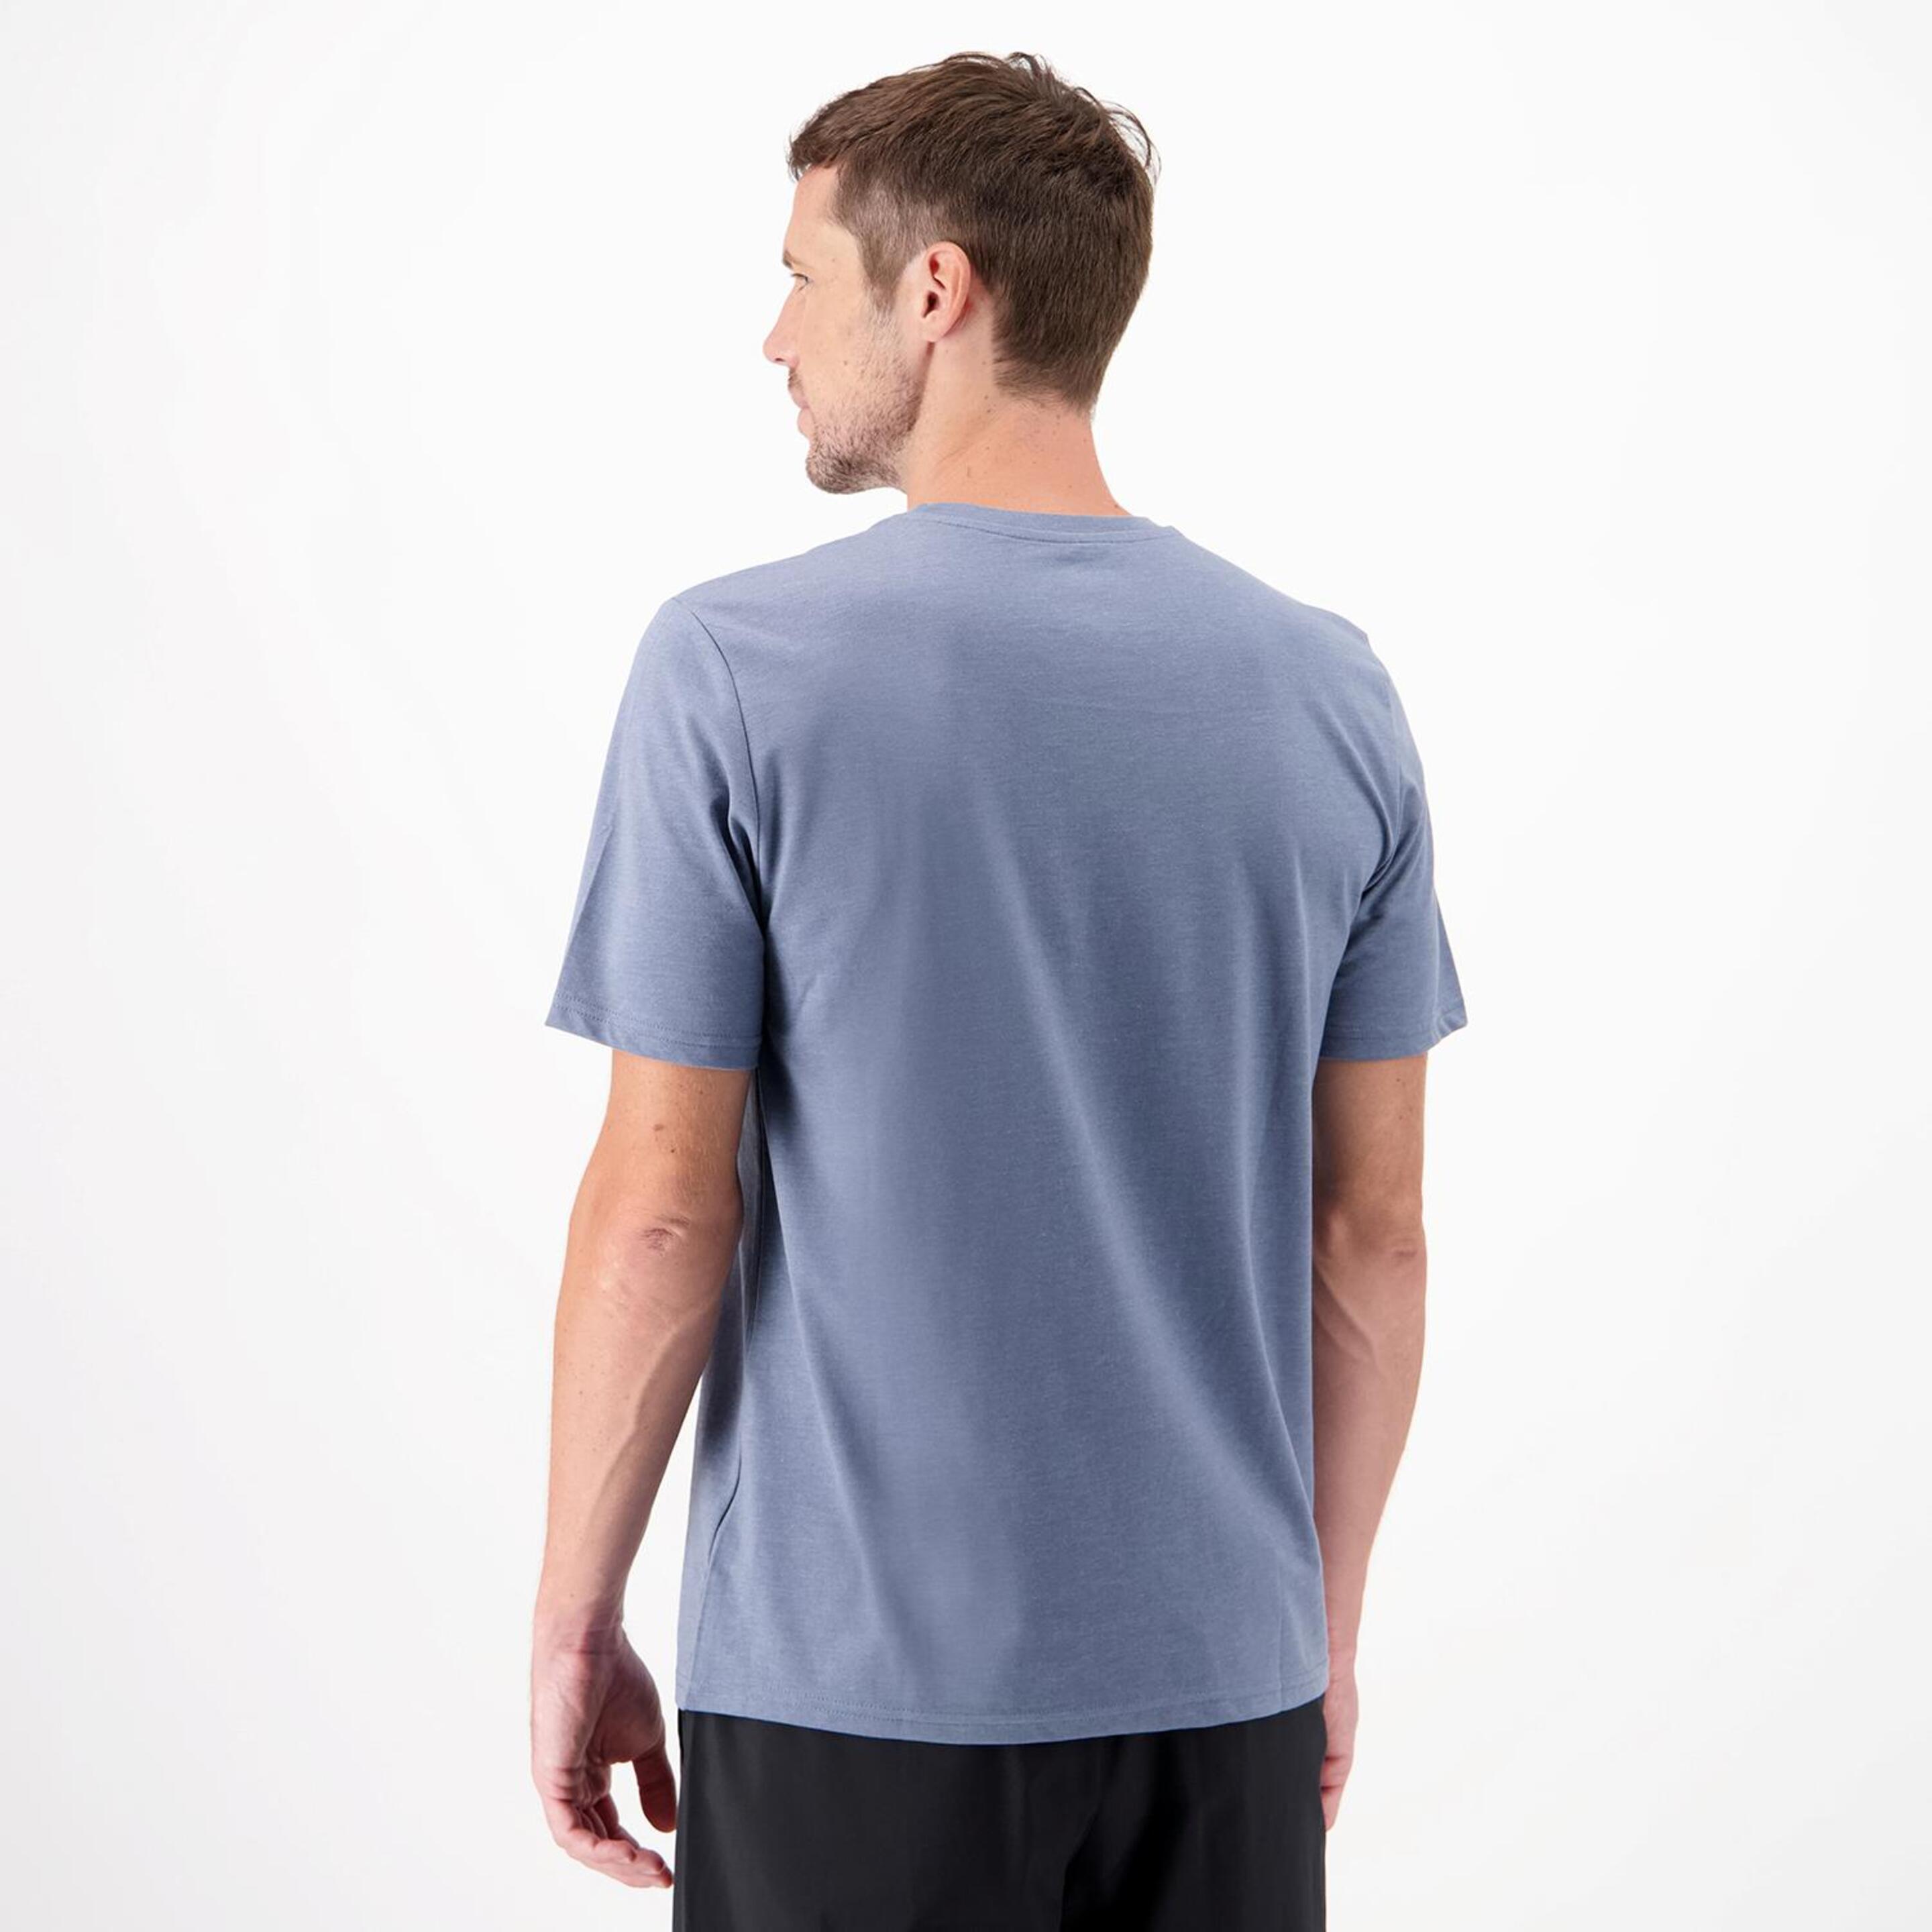 Skechers Motion - Azul - Camiseta Hombre